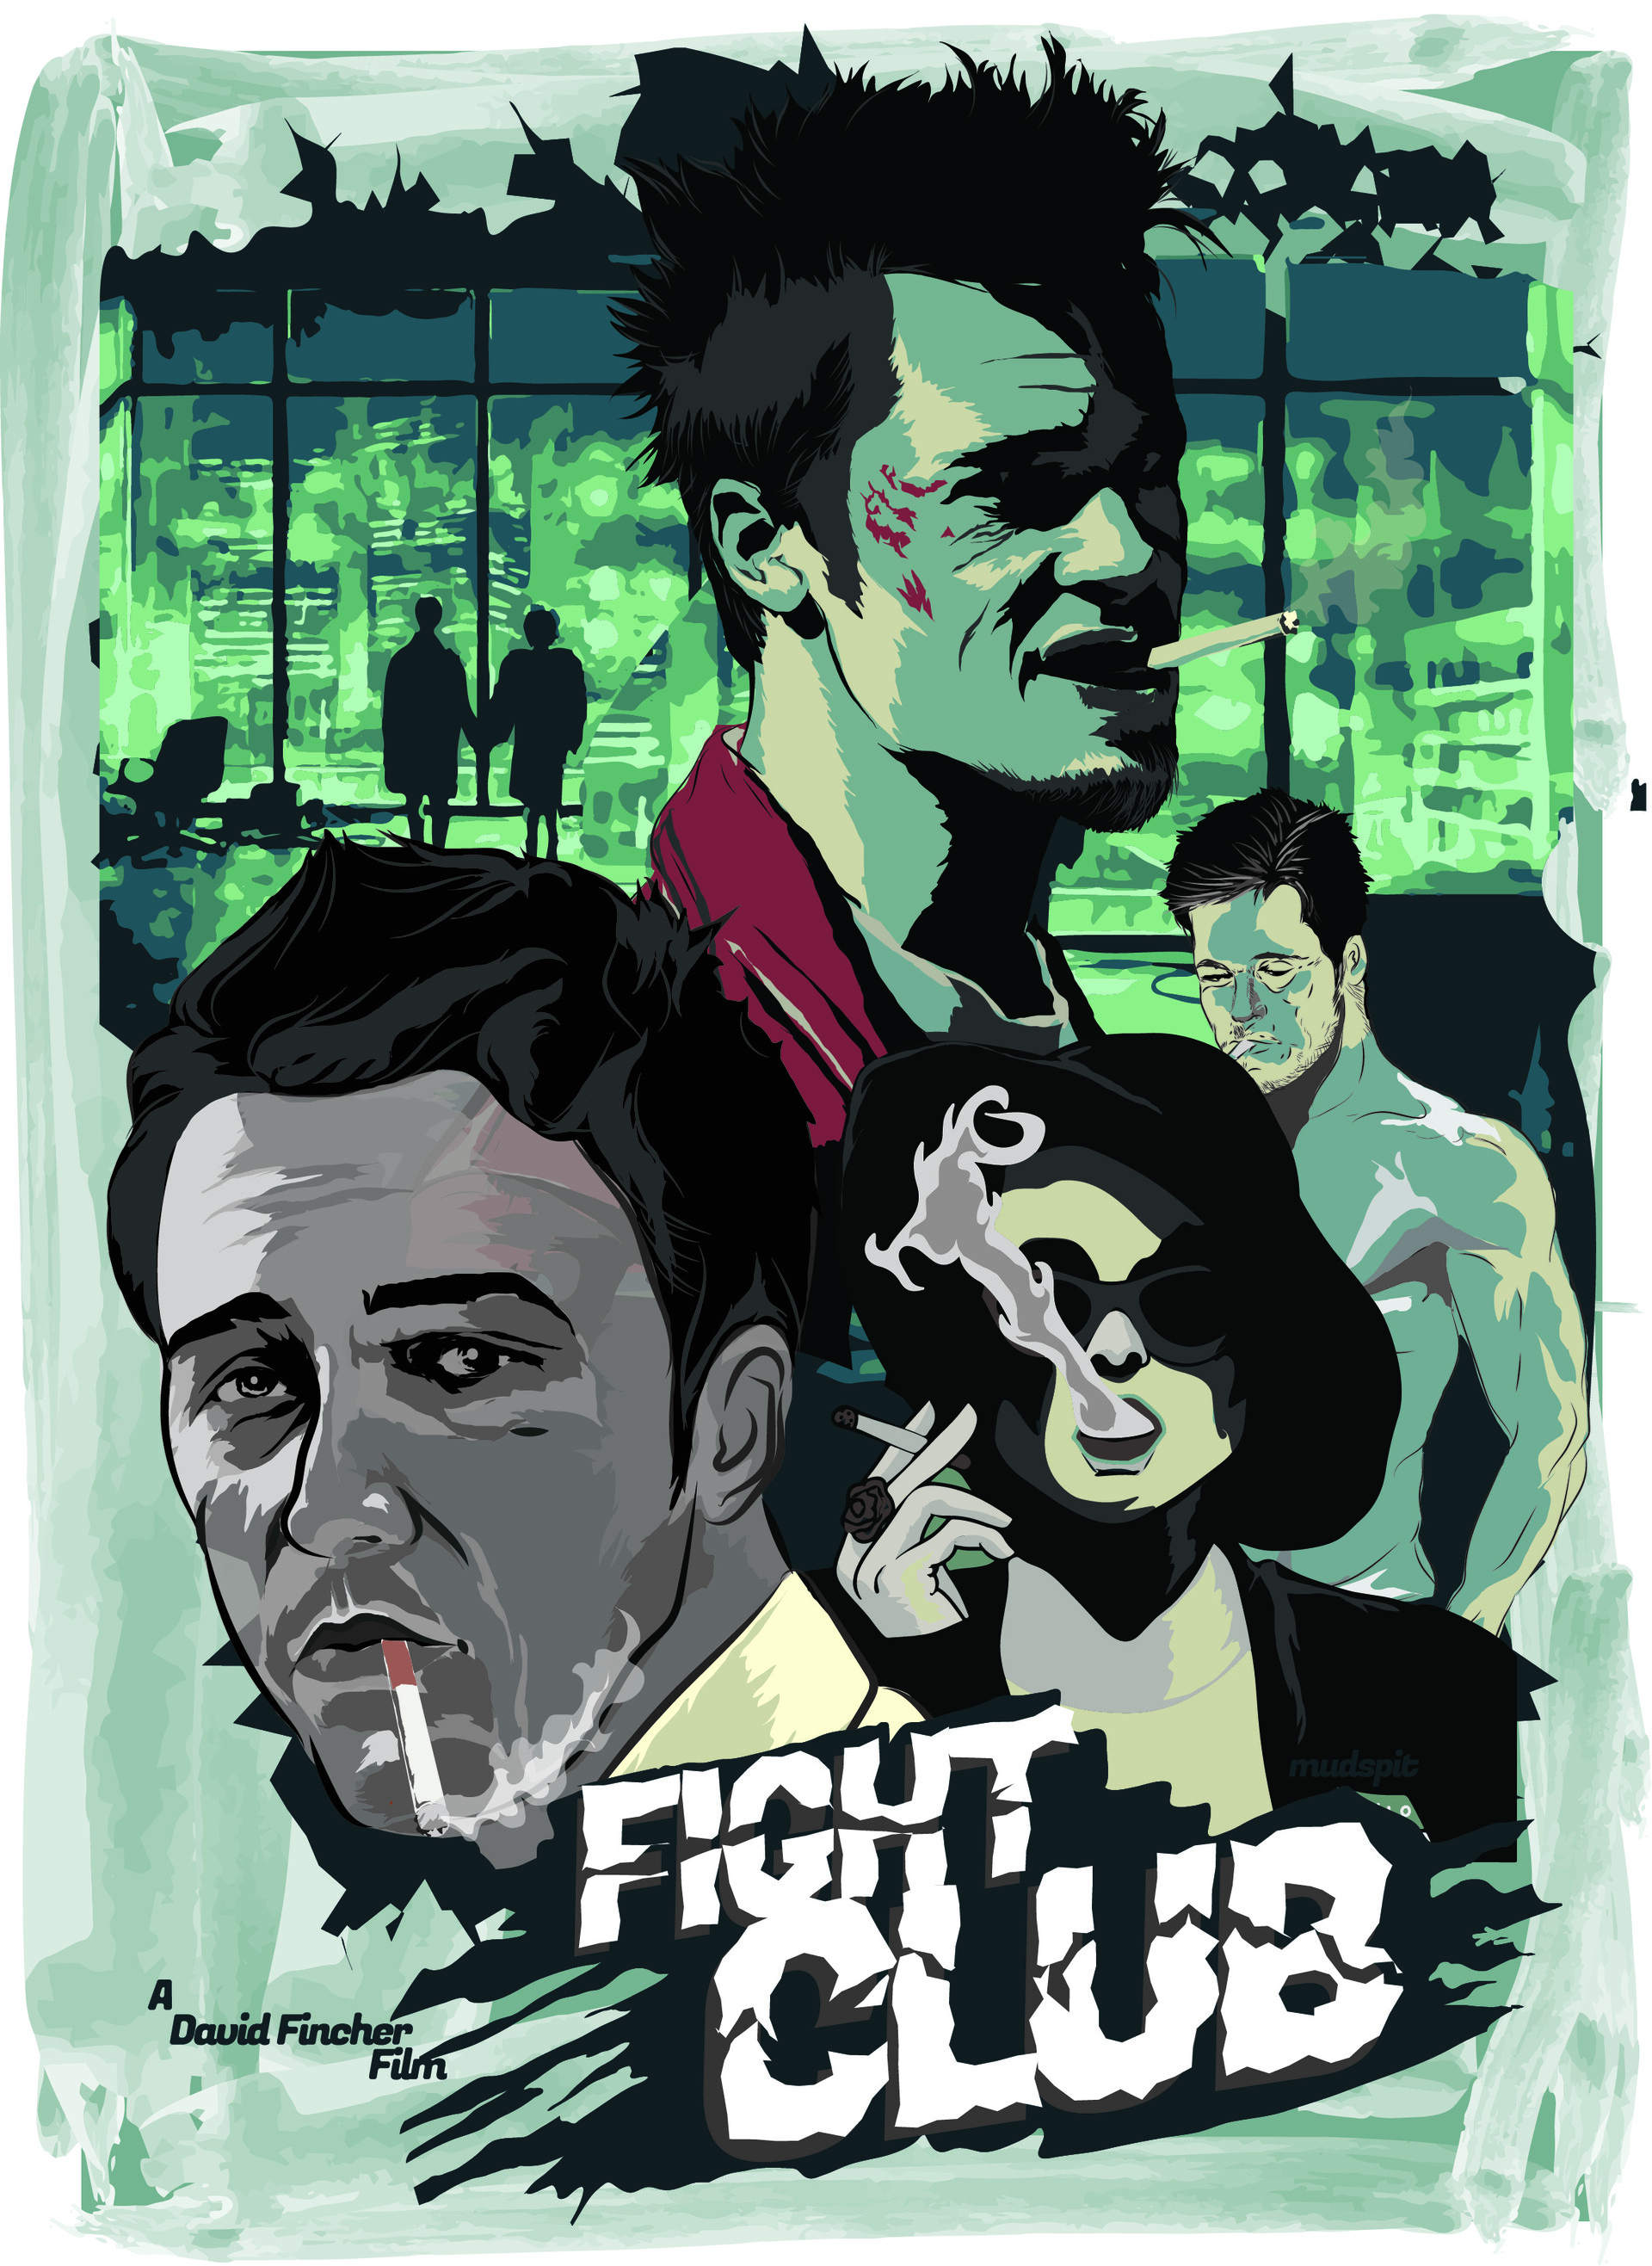 ArtStation - Fight club poster like artwork